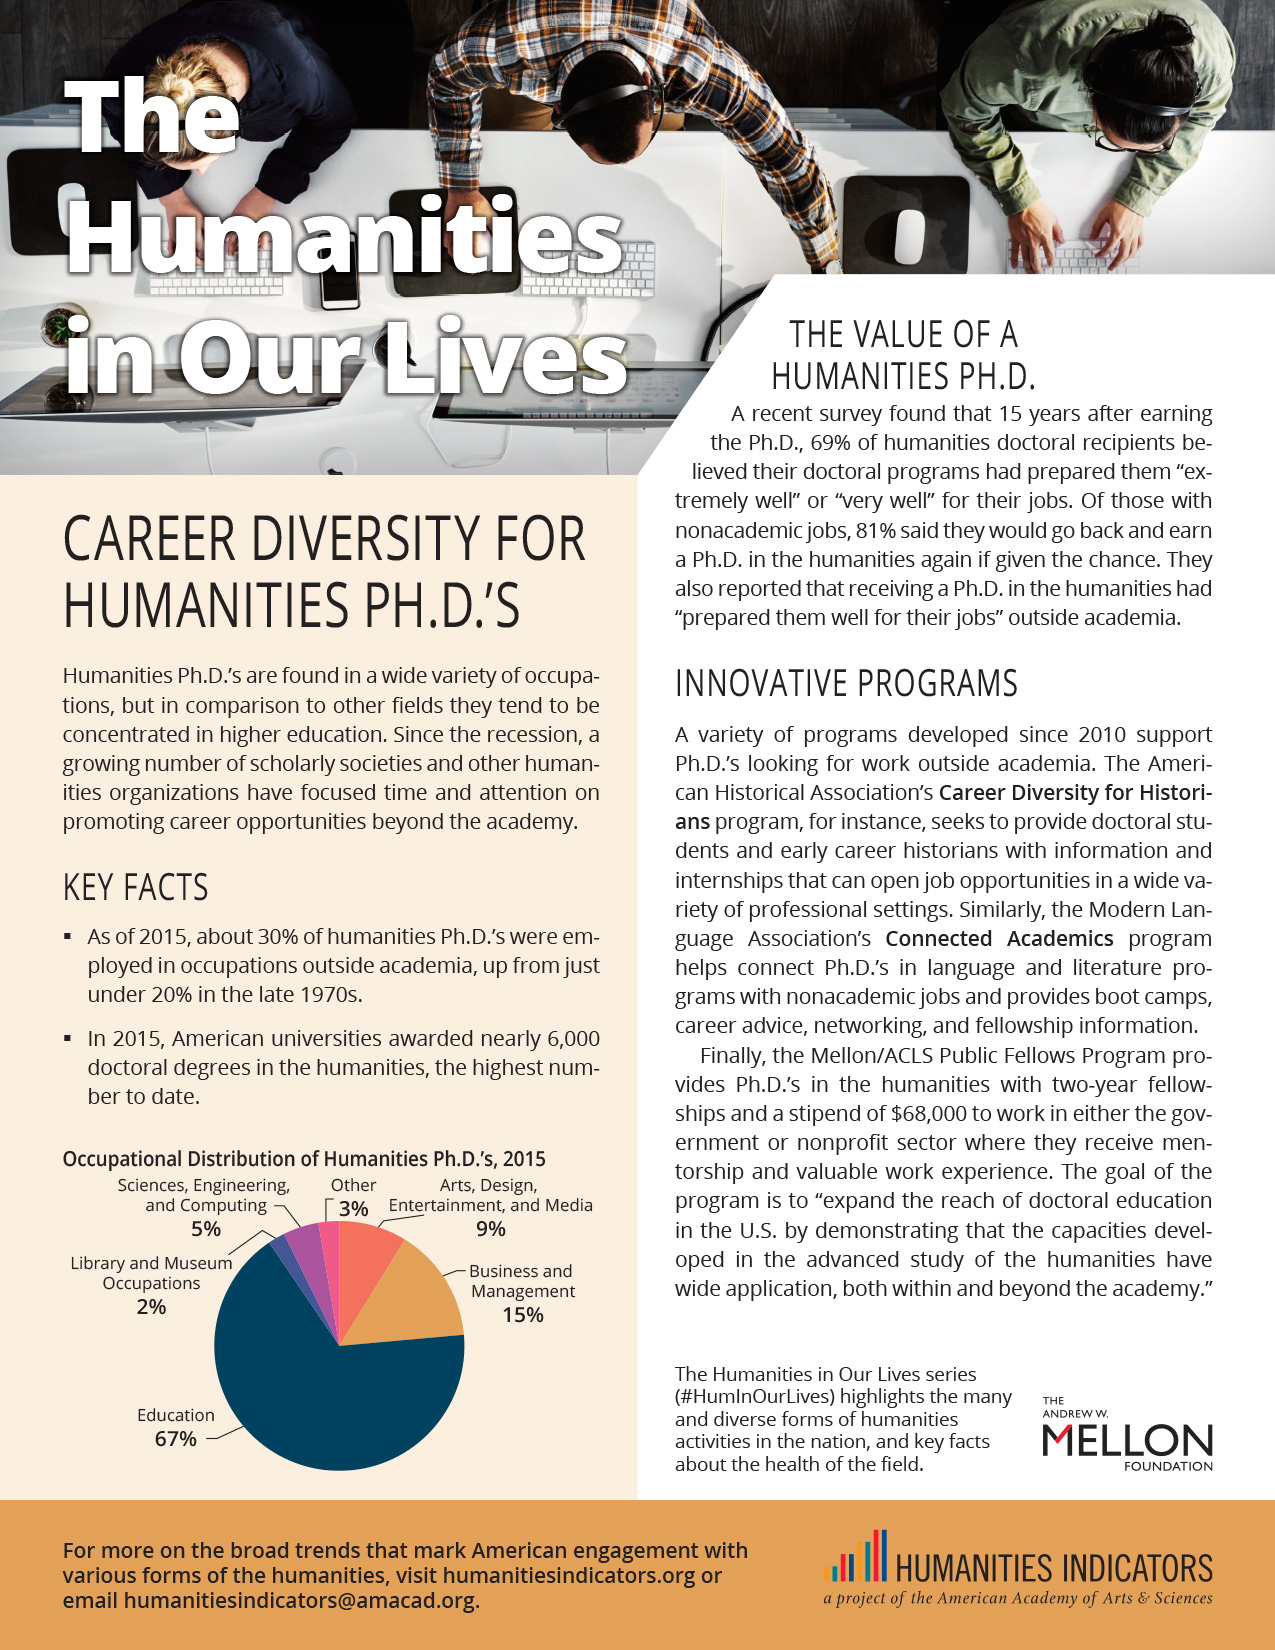 Career Diversity for Humanities PhDs